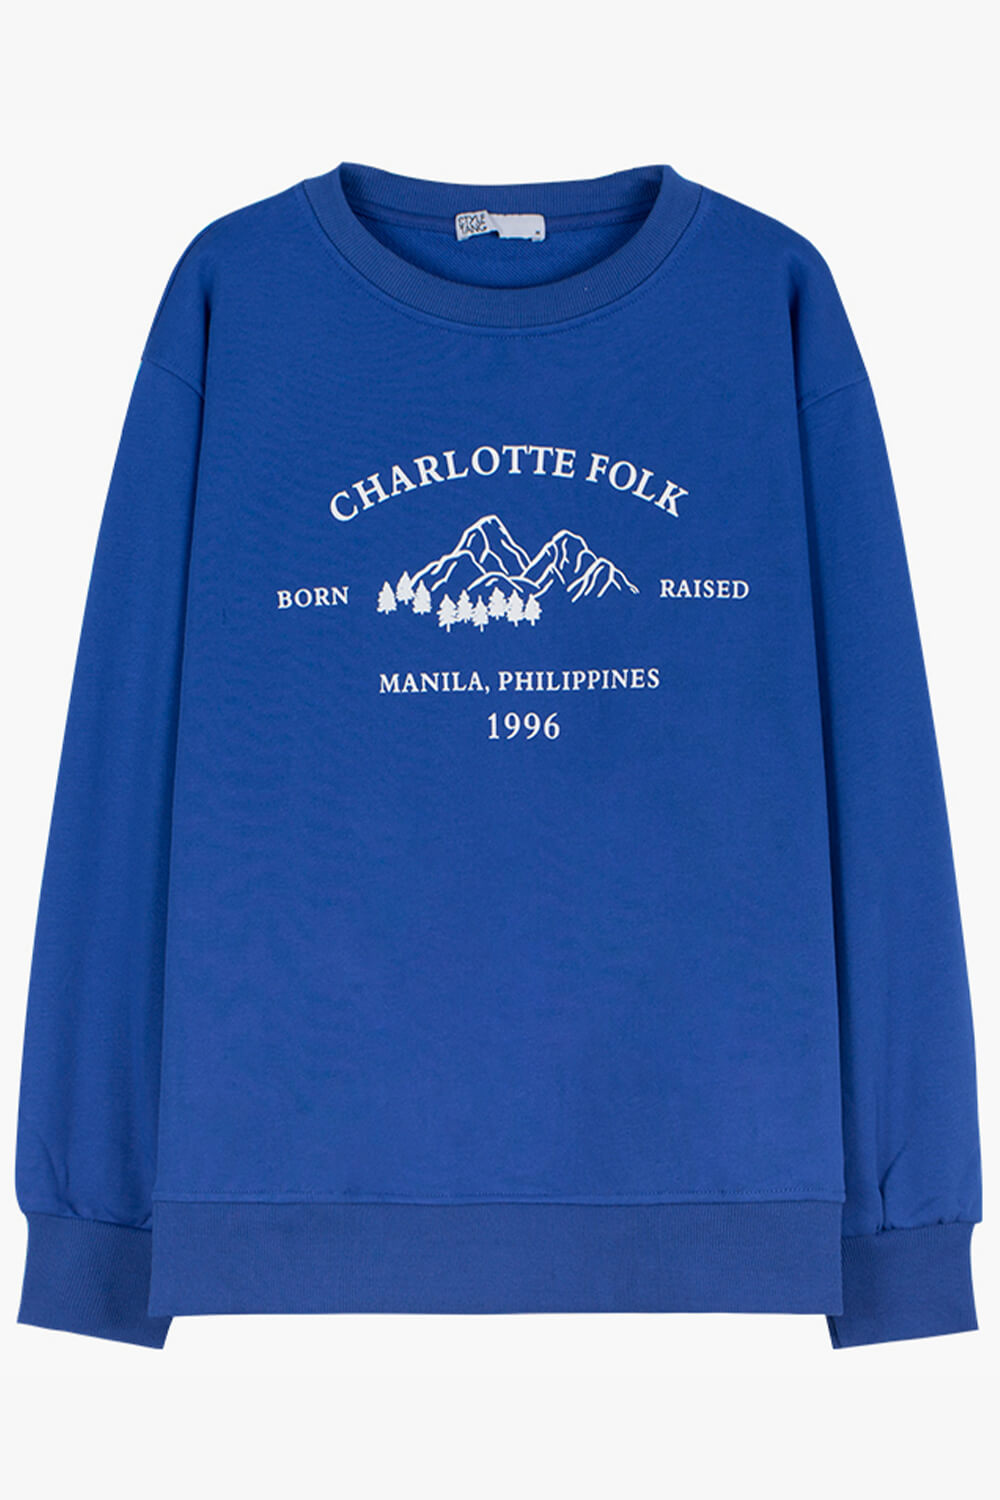 Charlotte Folk 1996 Sweatshirt